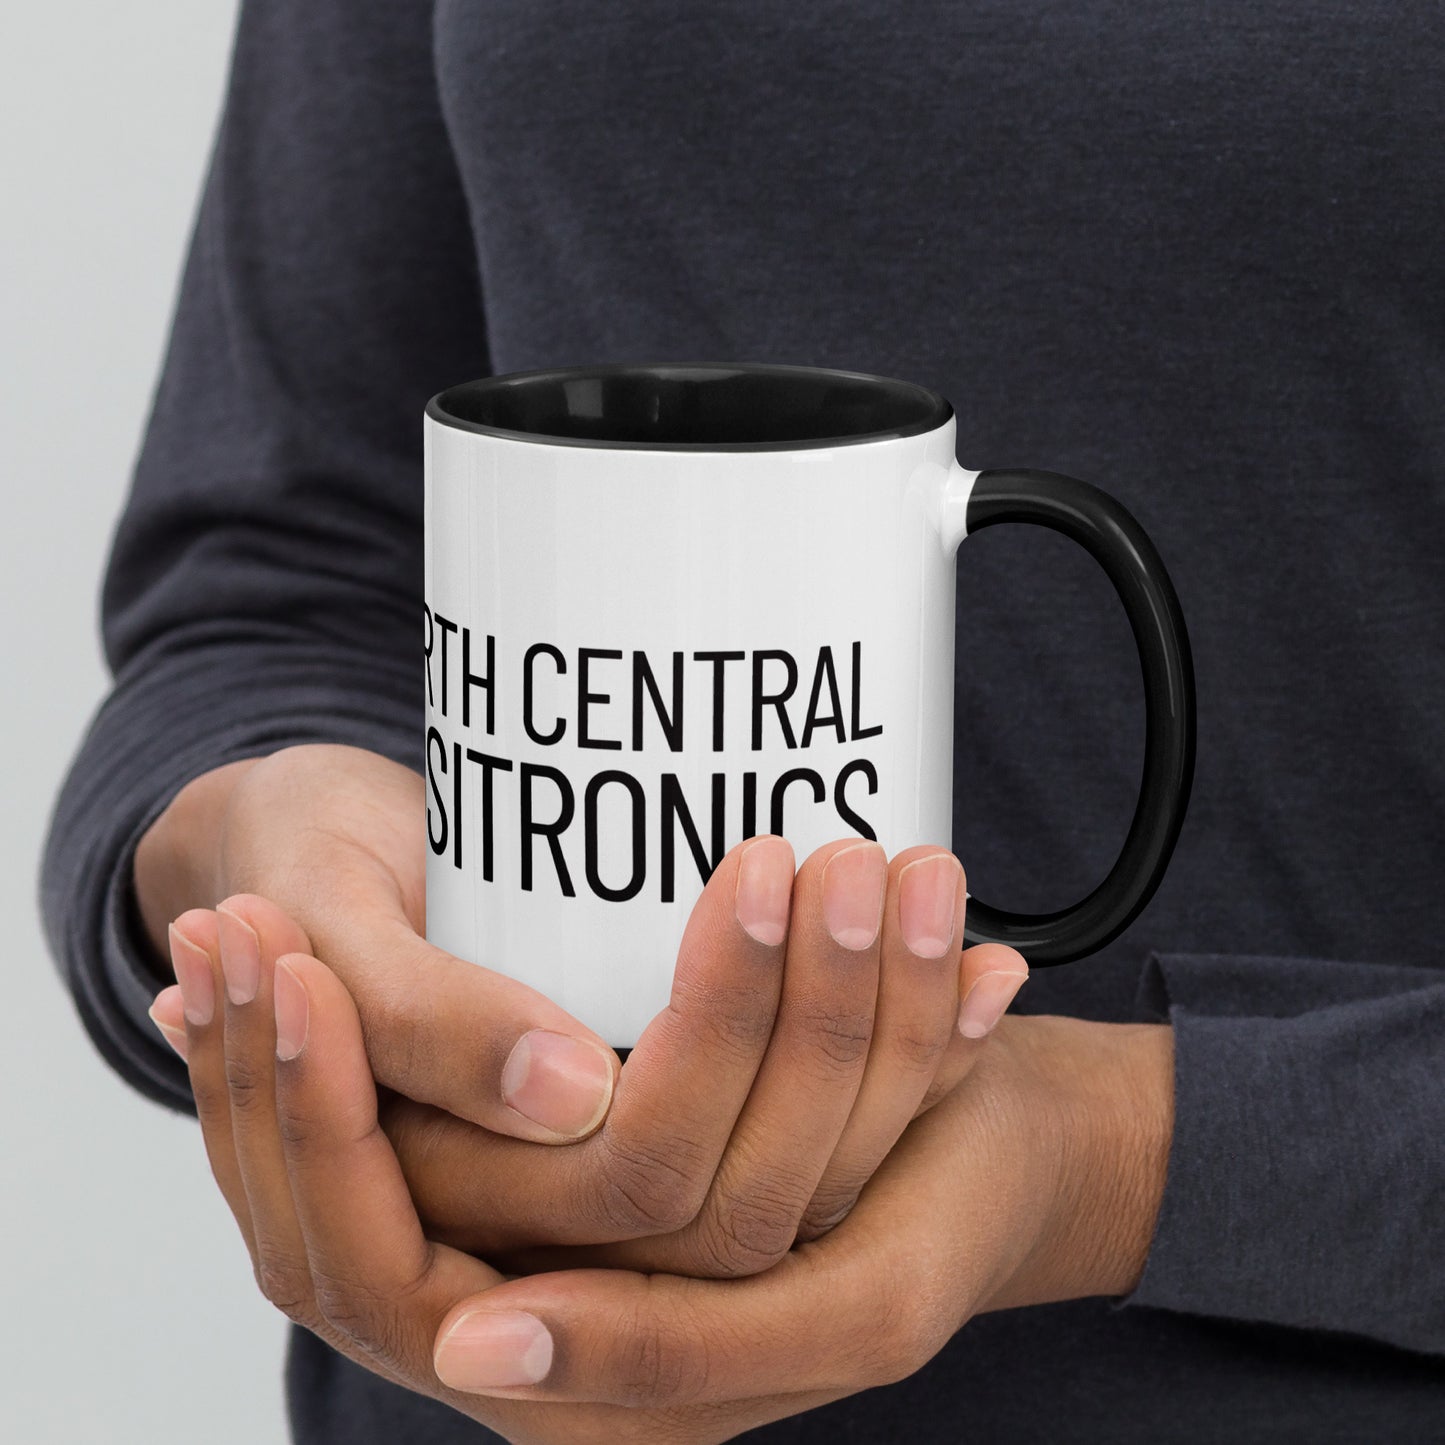 North Central Positronics Mug